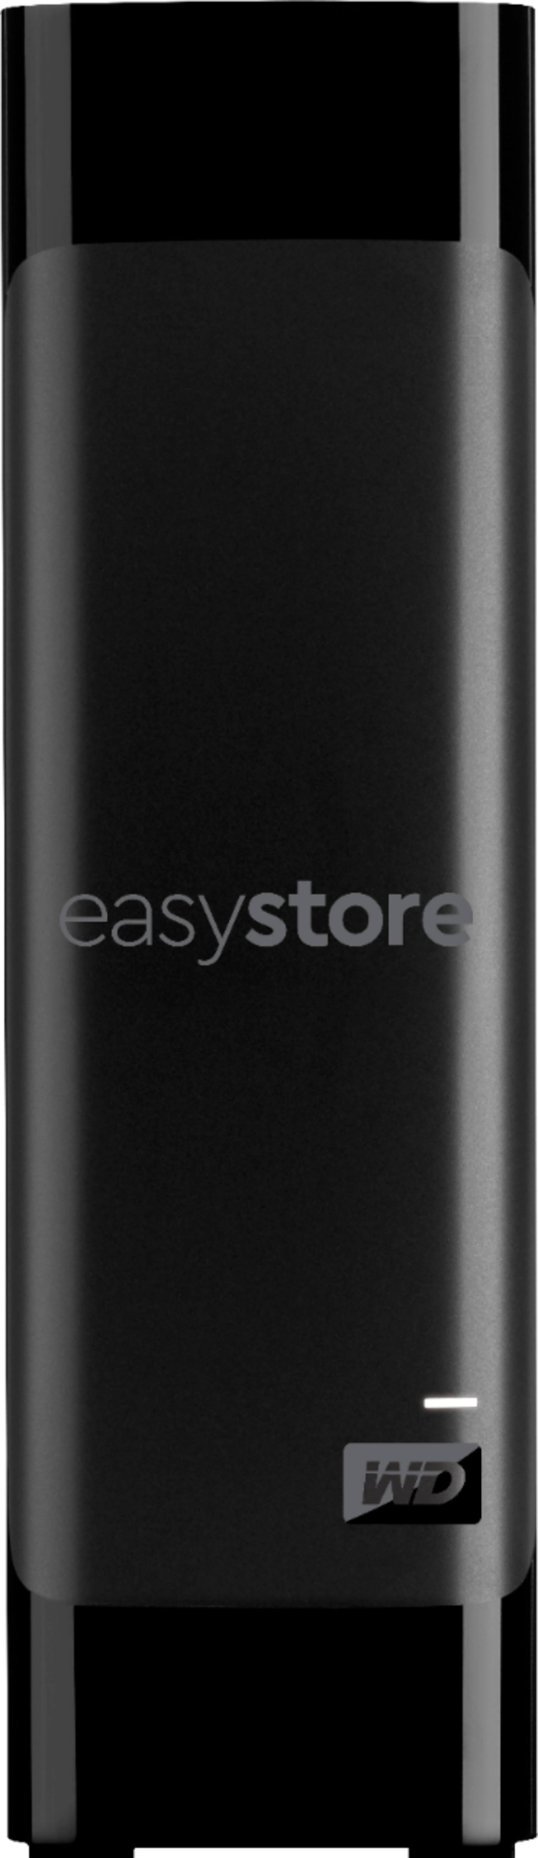 WD Easystore 14TB External Hard Drive - Black $209.99 @ Best Buy